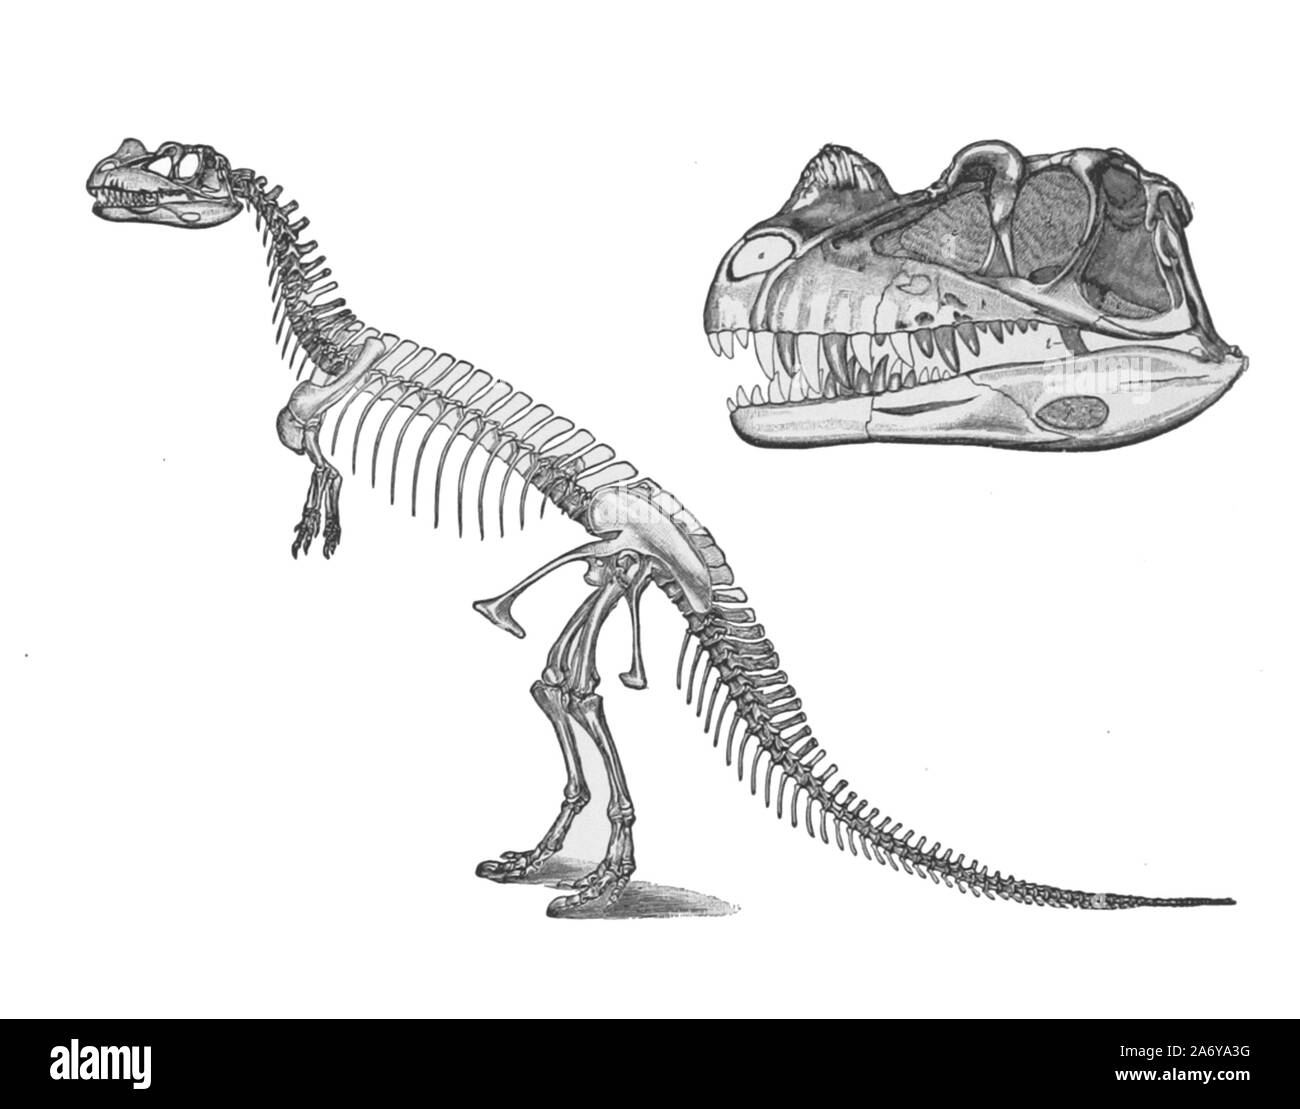 vintage illustration of an extinct animal Stock Photo - Alamy